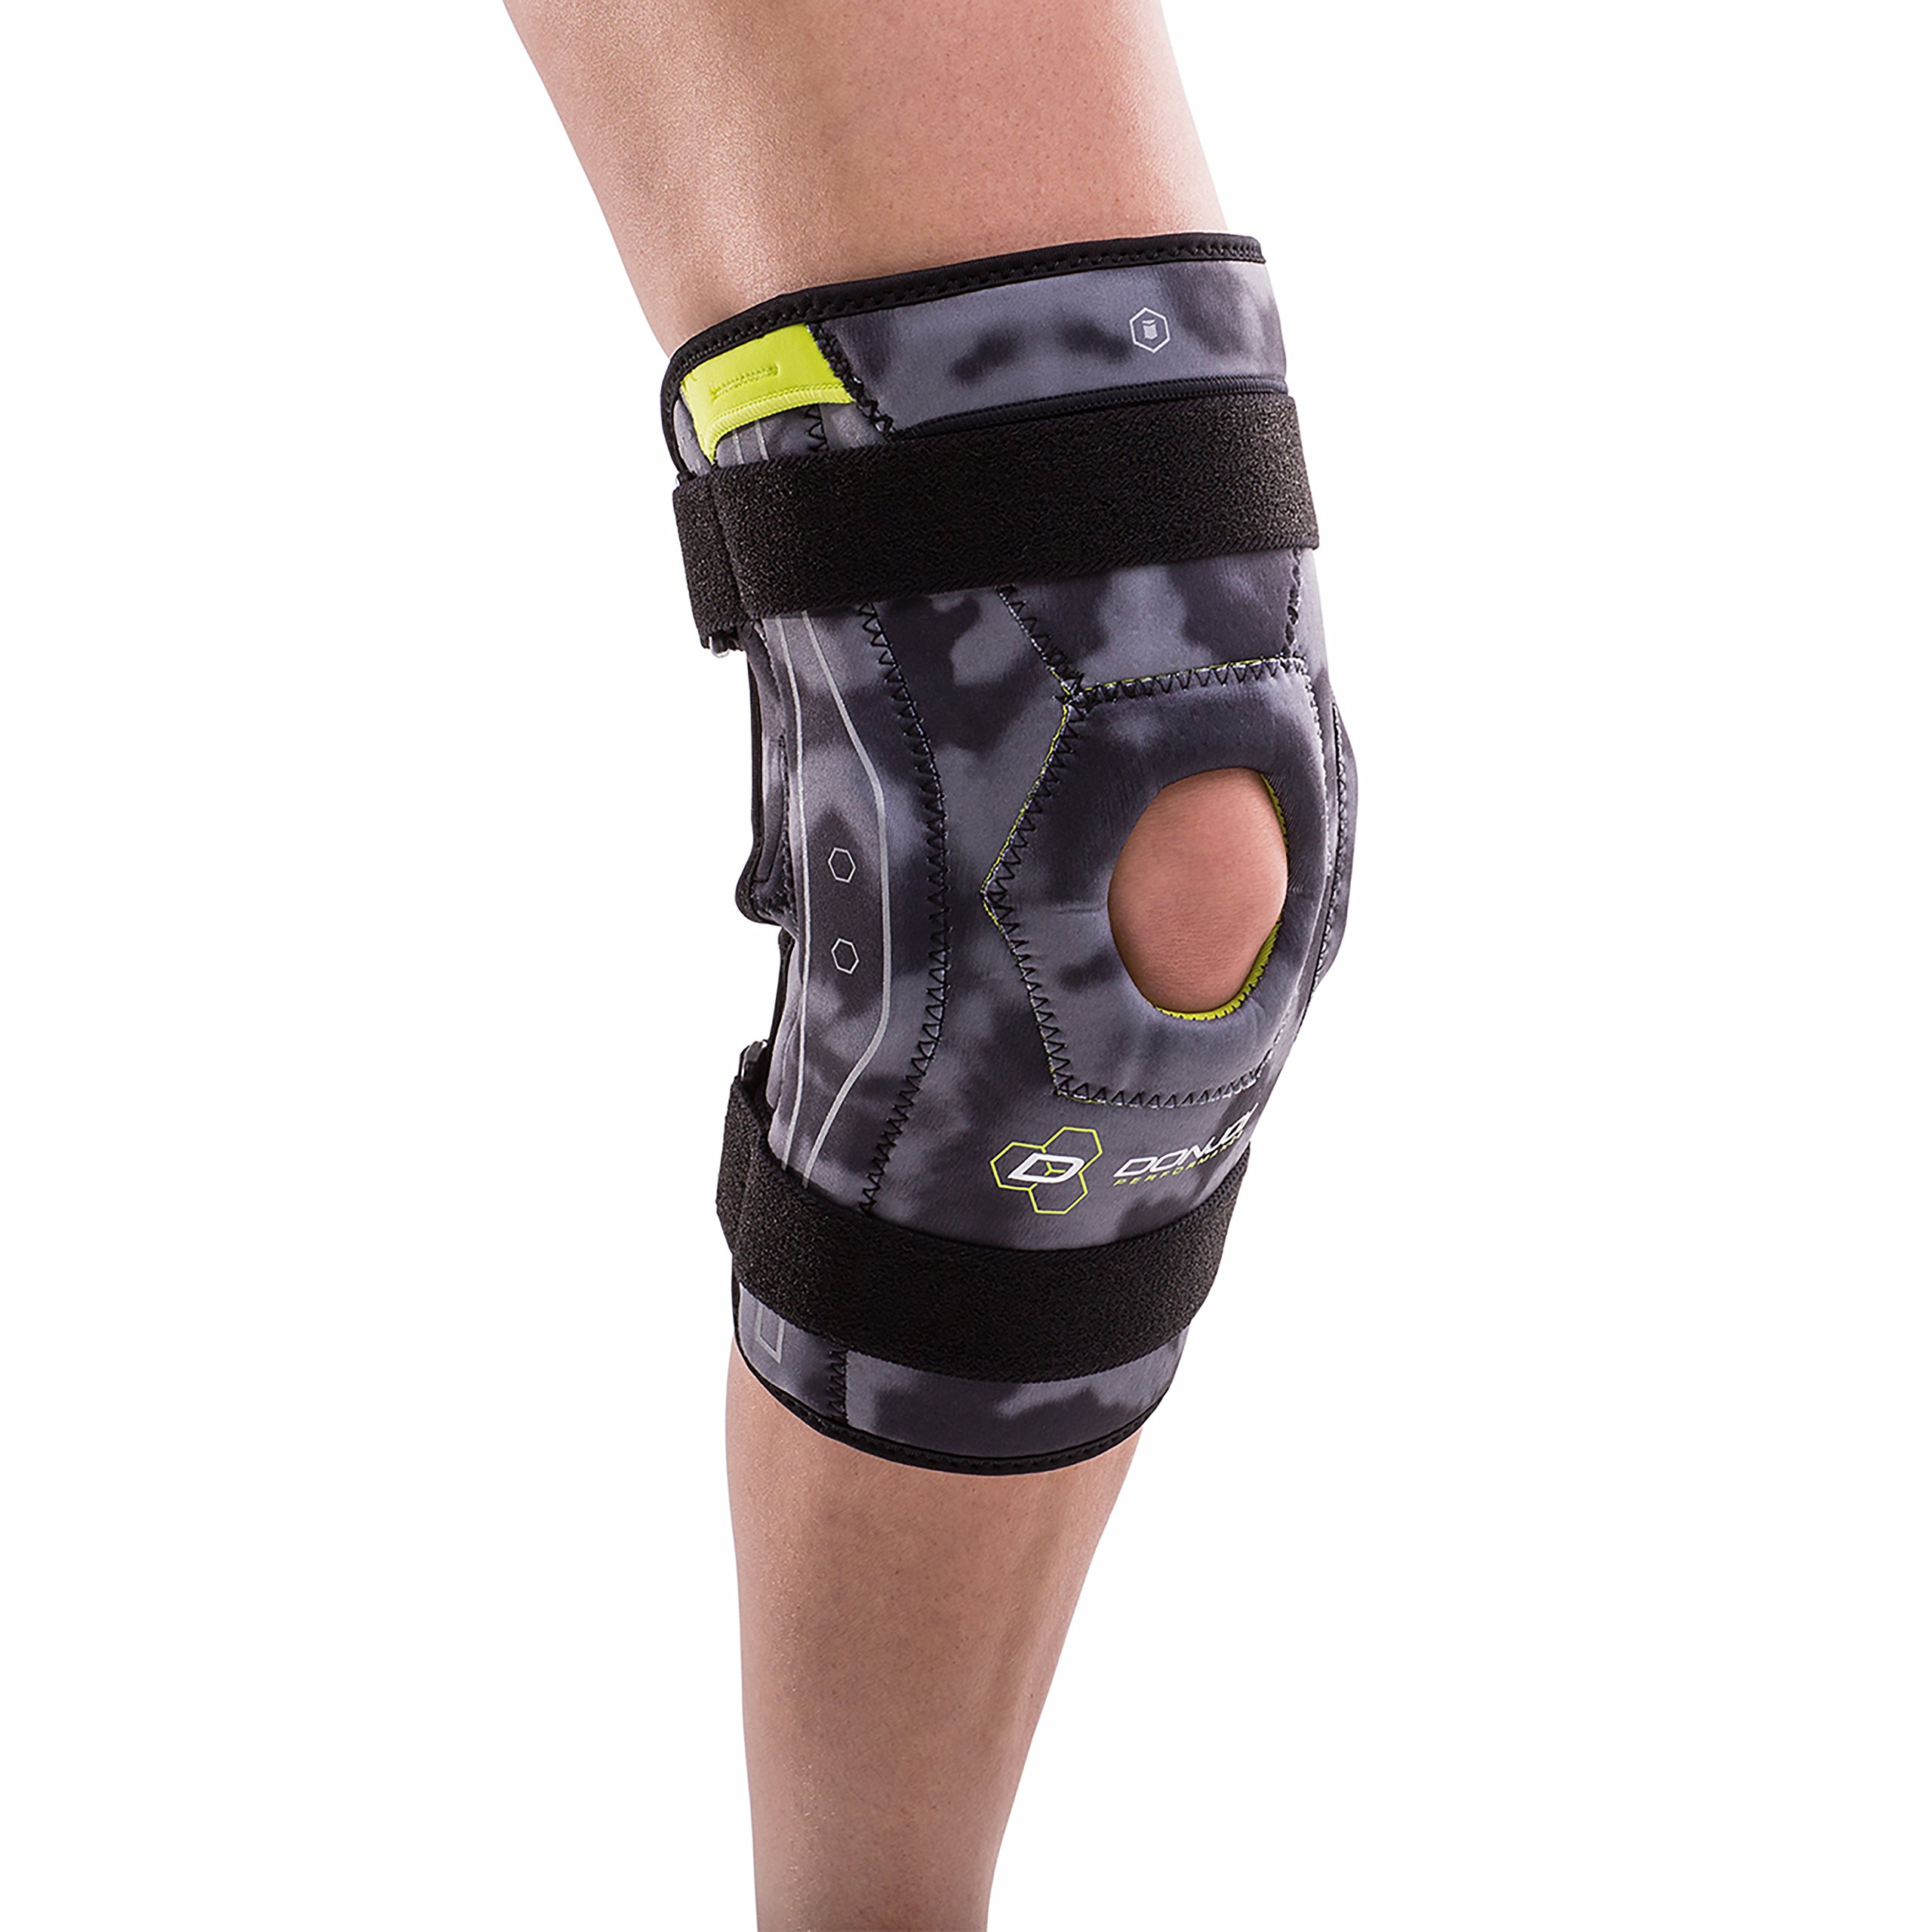 DonJoy Performance Bionic Knee Brace Hinged Adjustable Patella